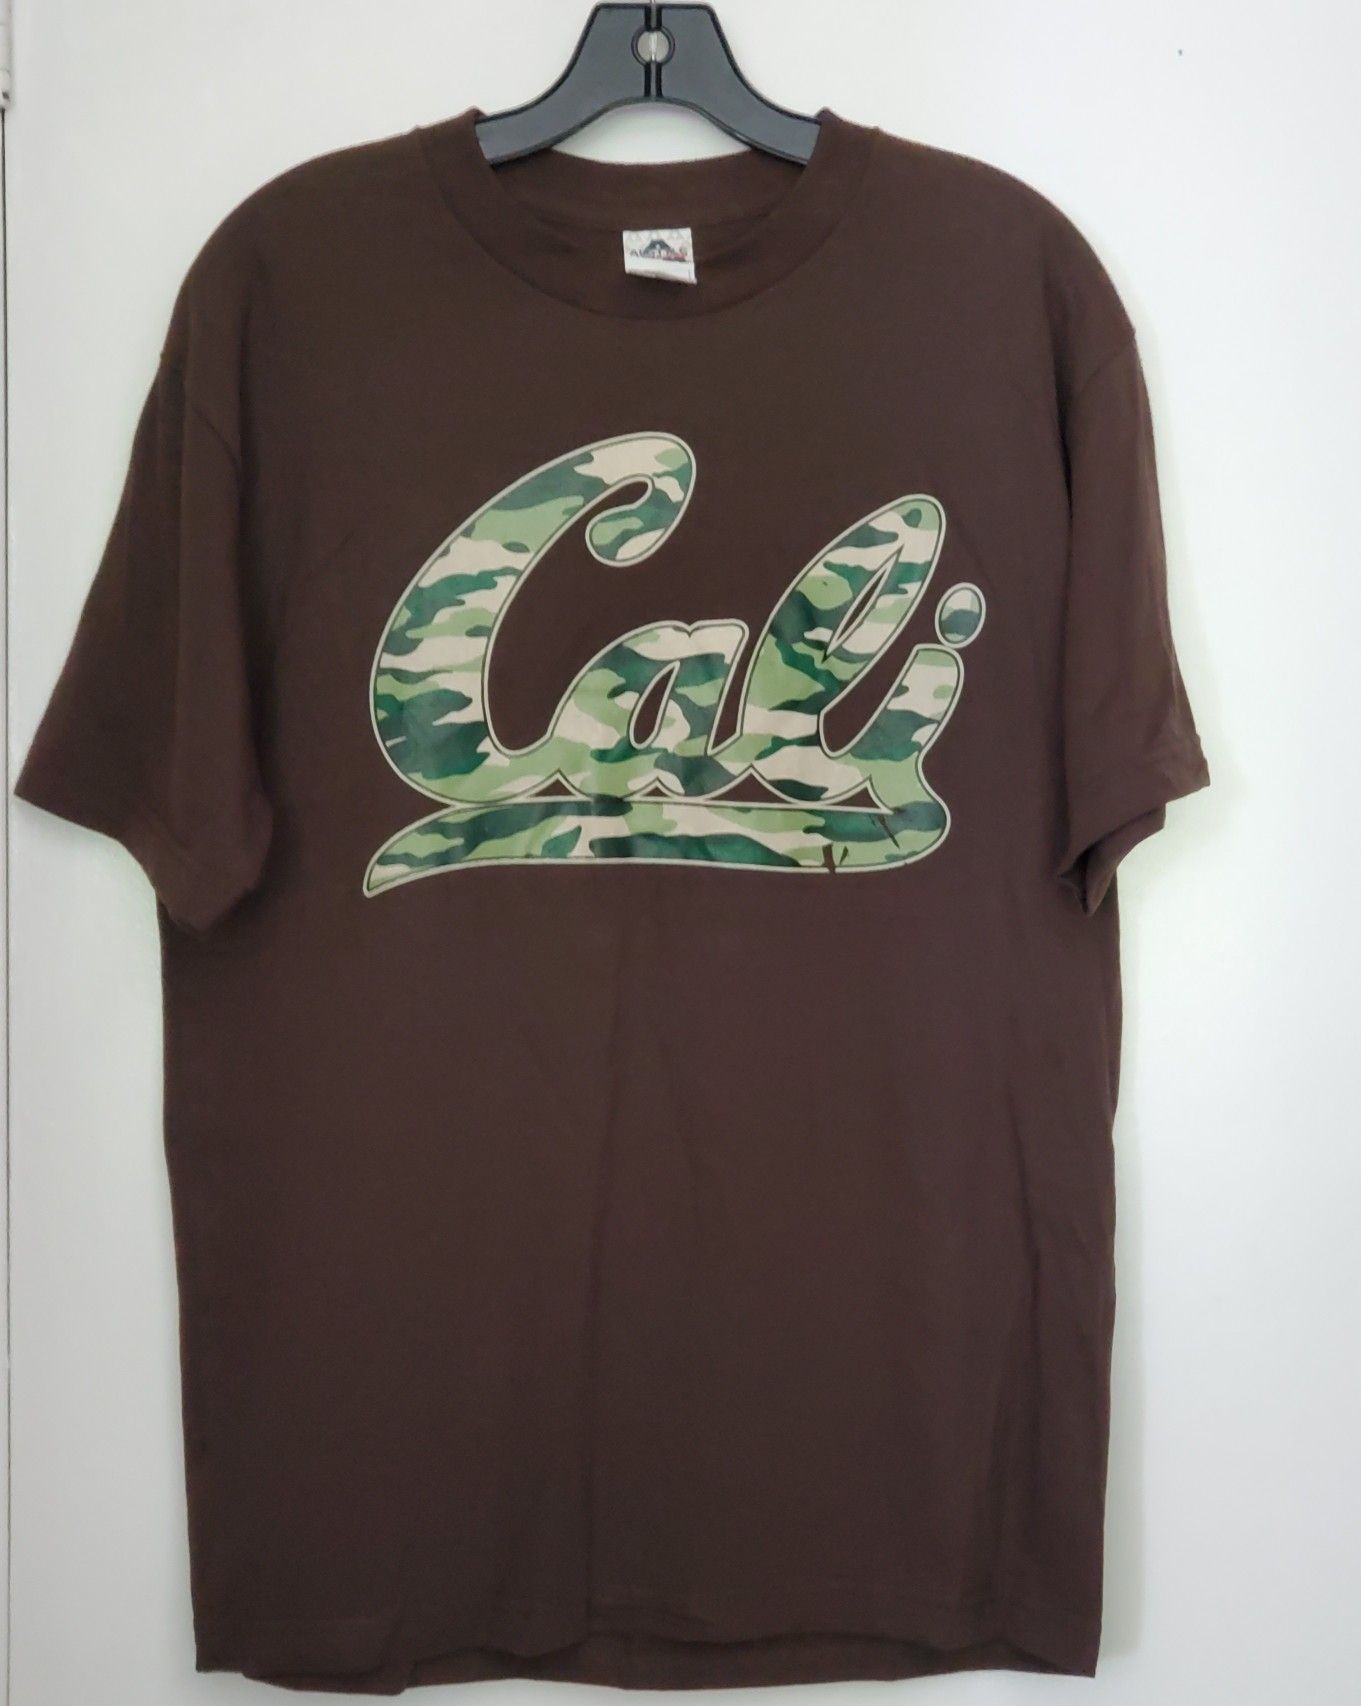 Cali T shirt Camo print on Brown T shirt Size med